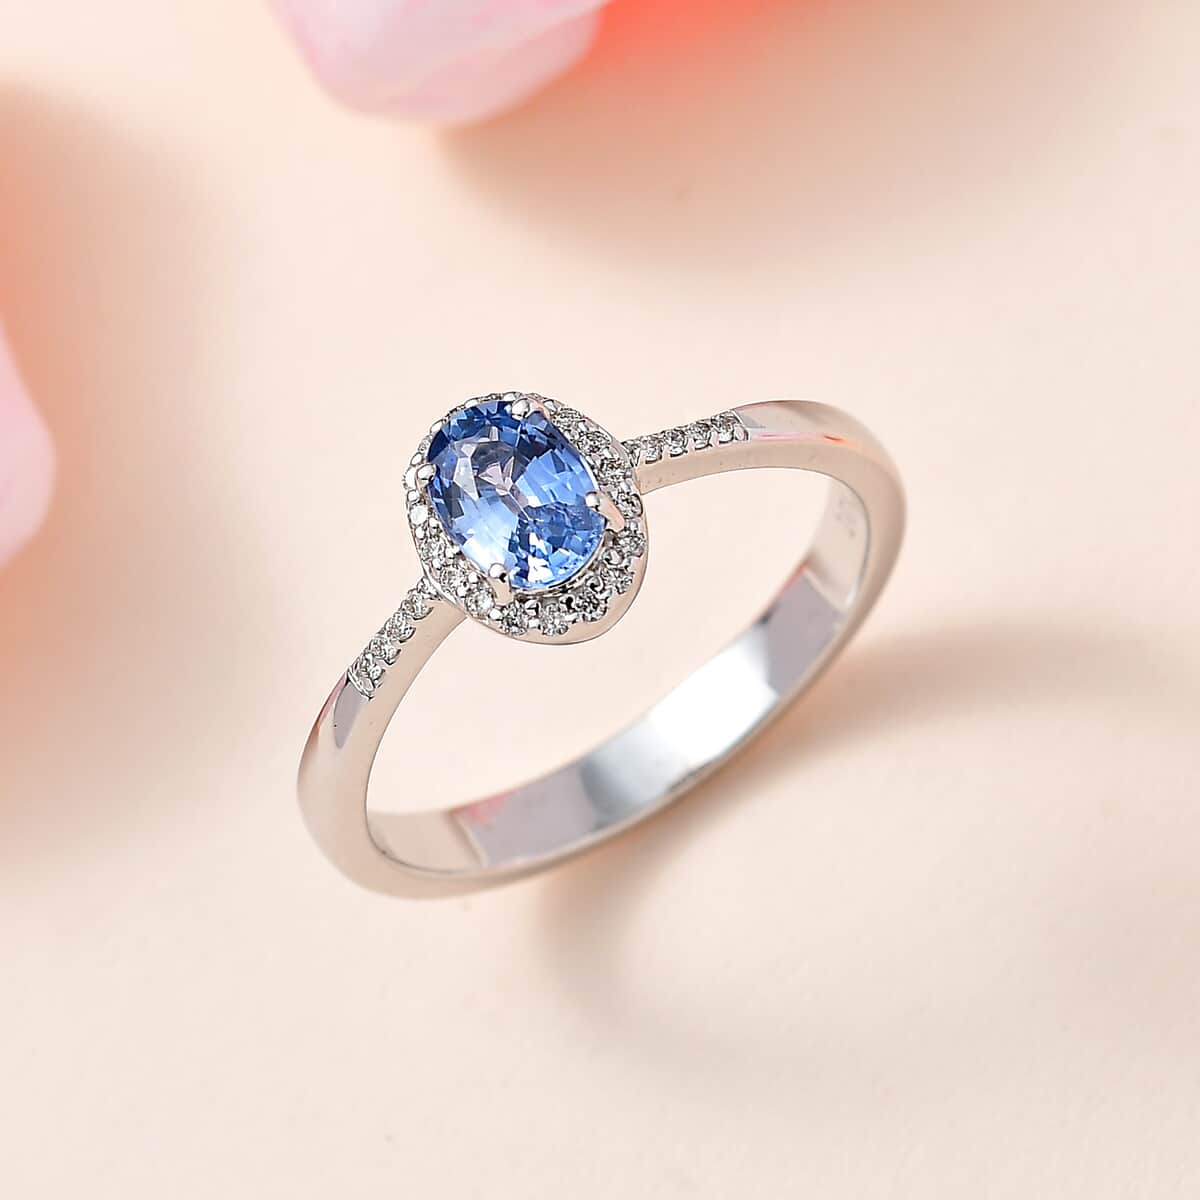 Luxoro 10K White Gold Premium Ceylon Blue Sapphire and G-H I3 Diamond Ring (Size 6.0) 1.15 ctw image number 1